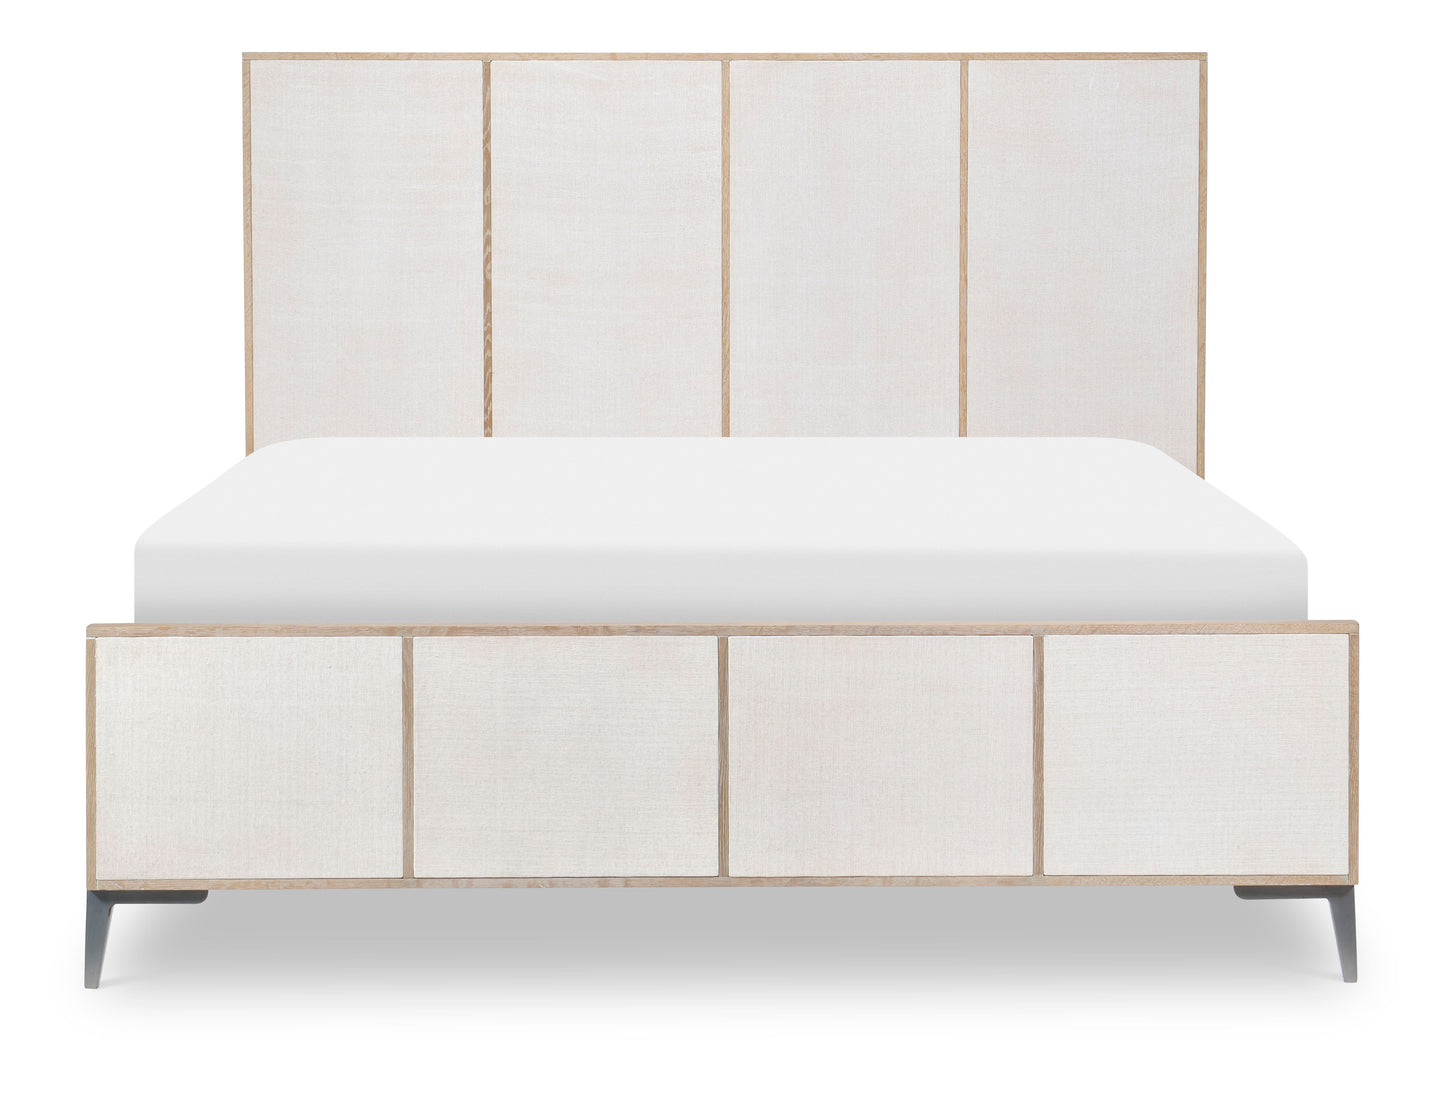 Biscayne - Panel Bed